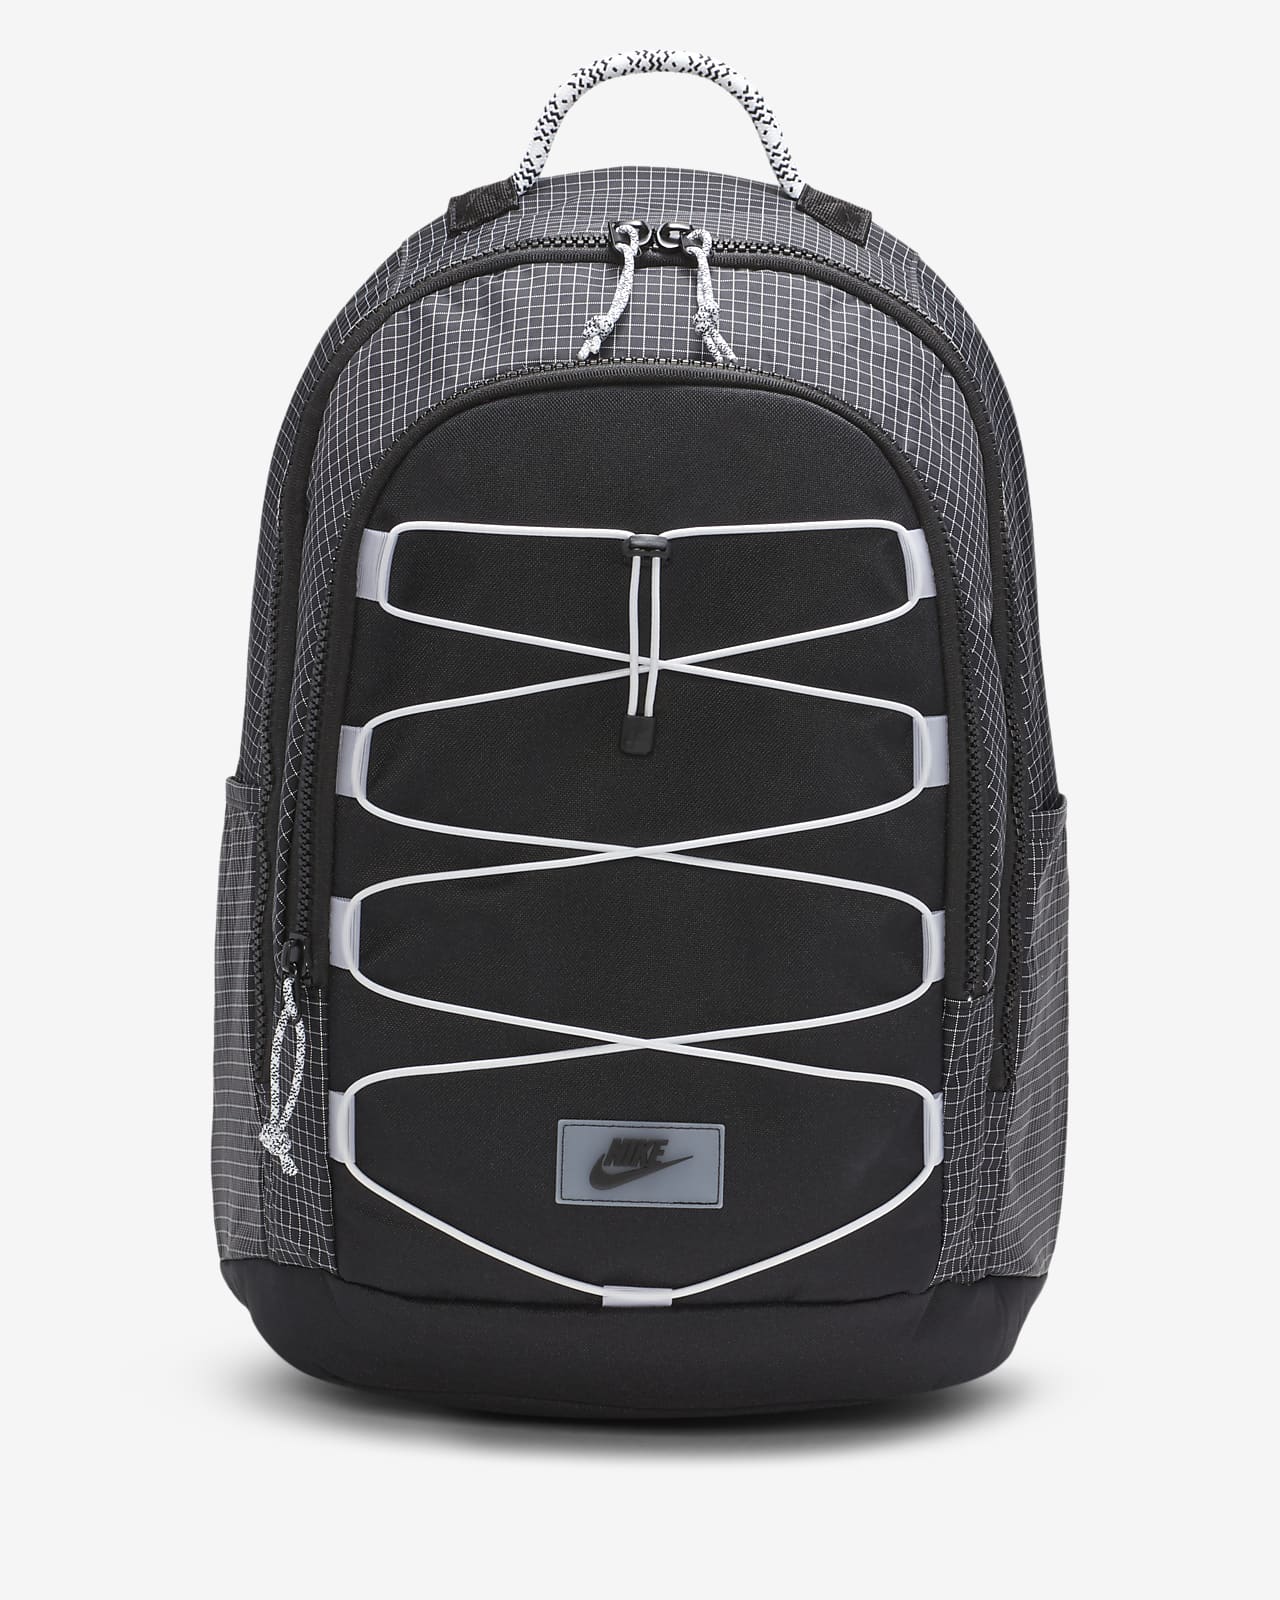 backpack nike hayward 2.0